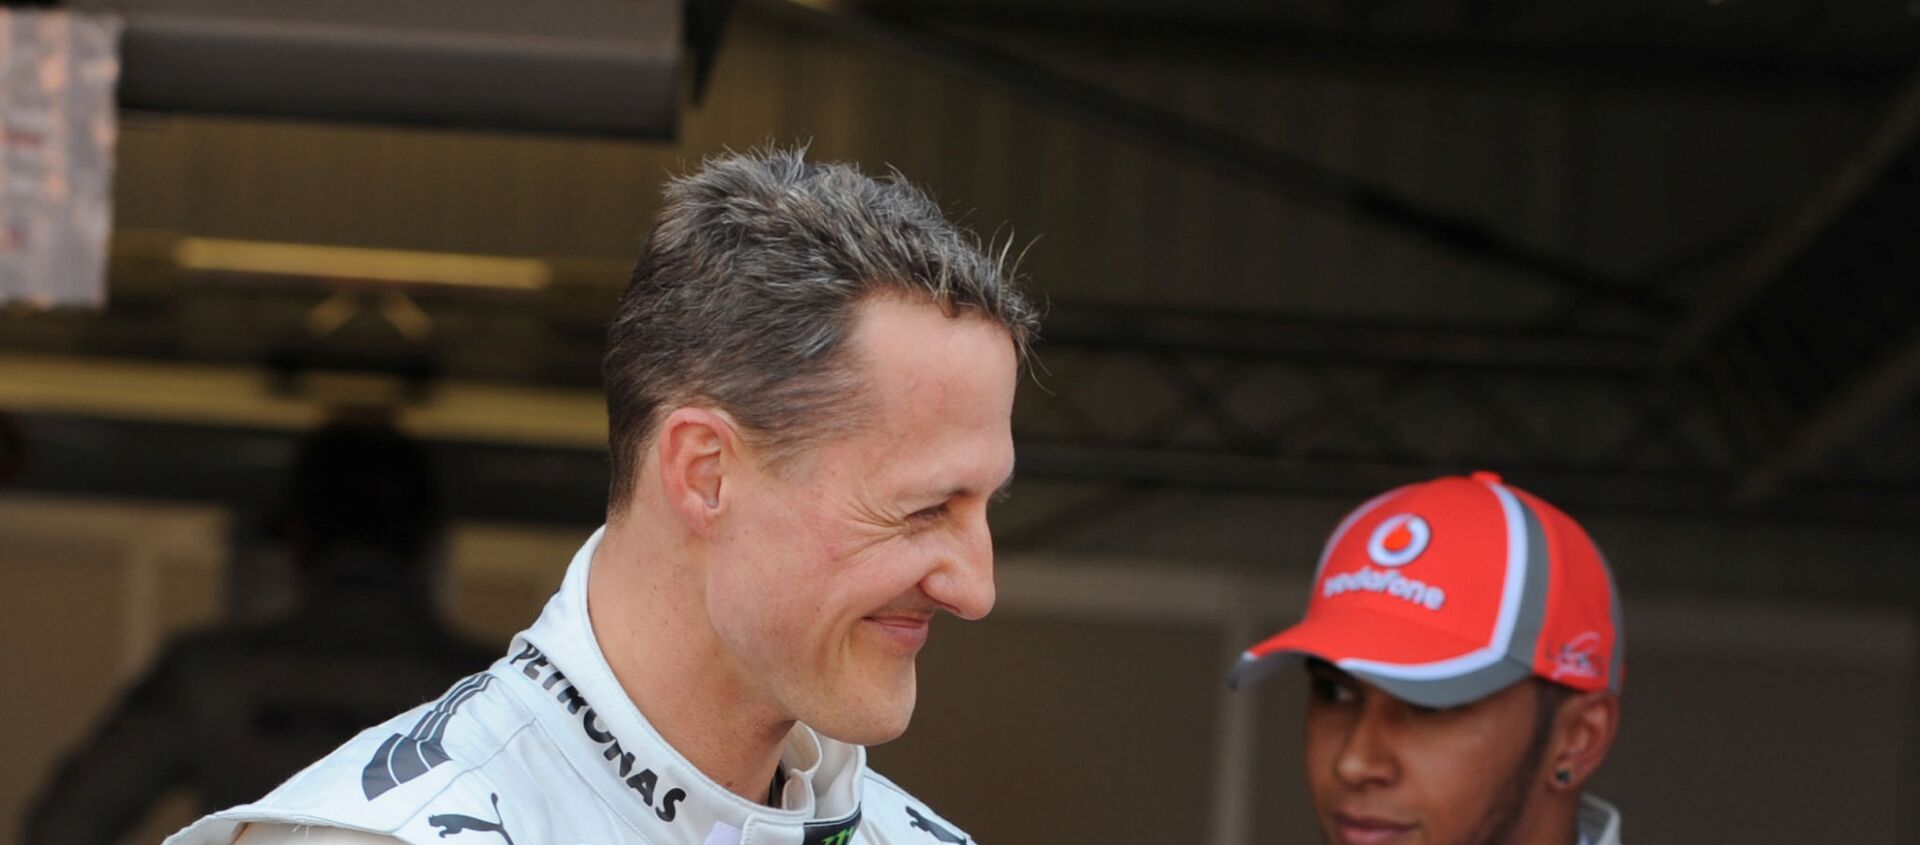 Michael Schumacher, Lewis Hamilton, Monaco Grand Prix 2012 - Sputnik Türkiye, 1920, 17.11.2020